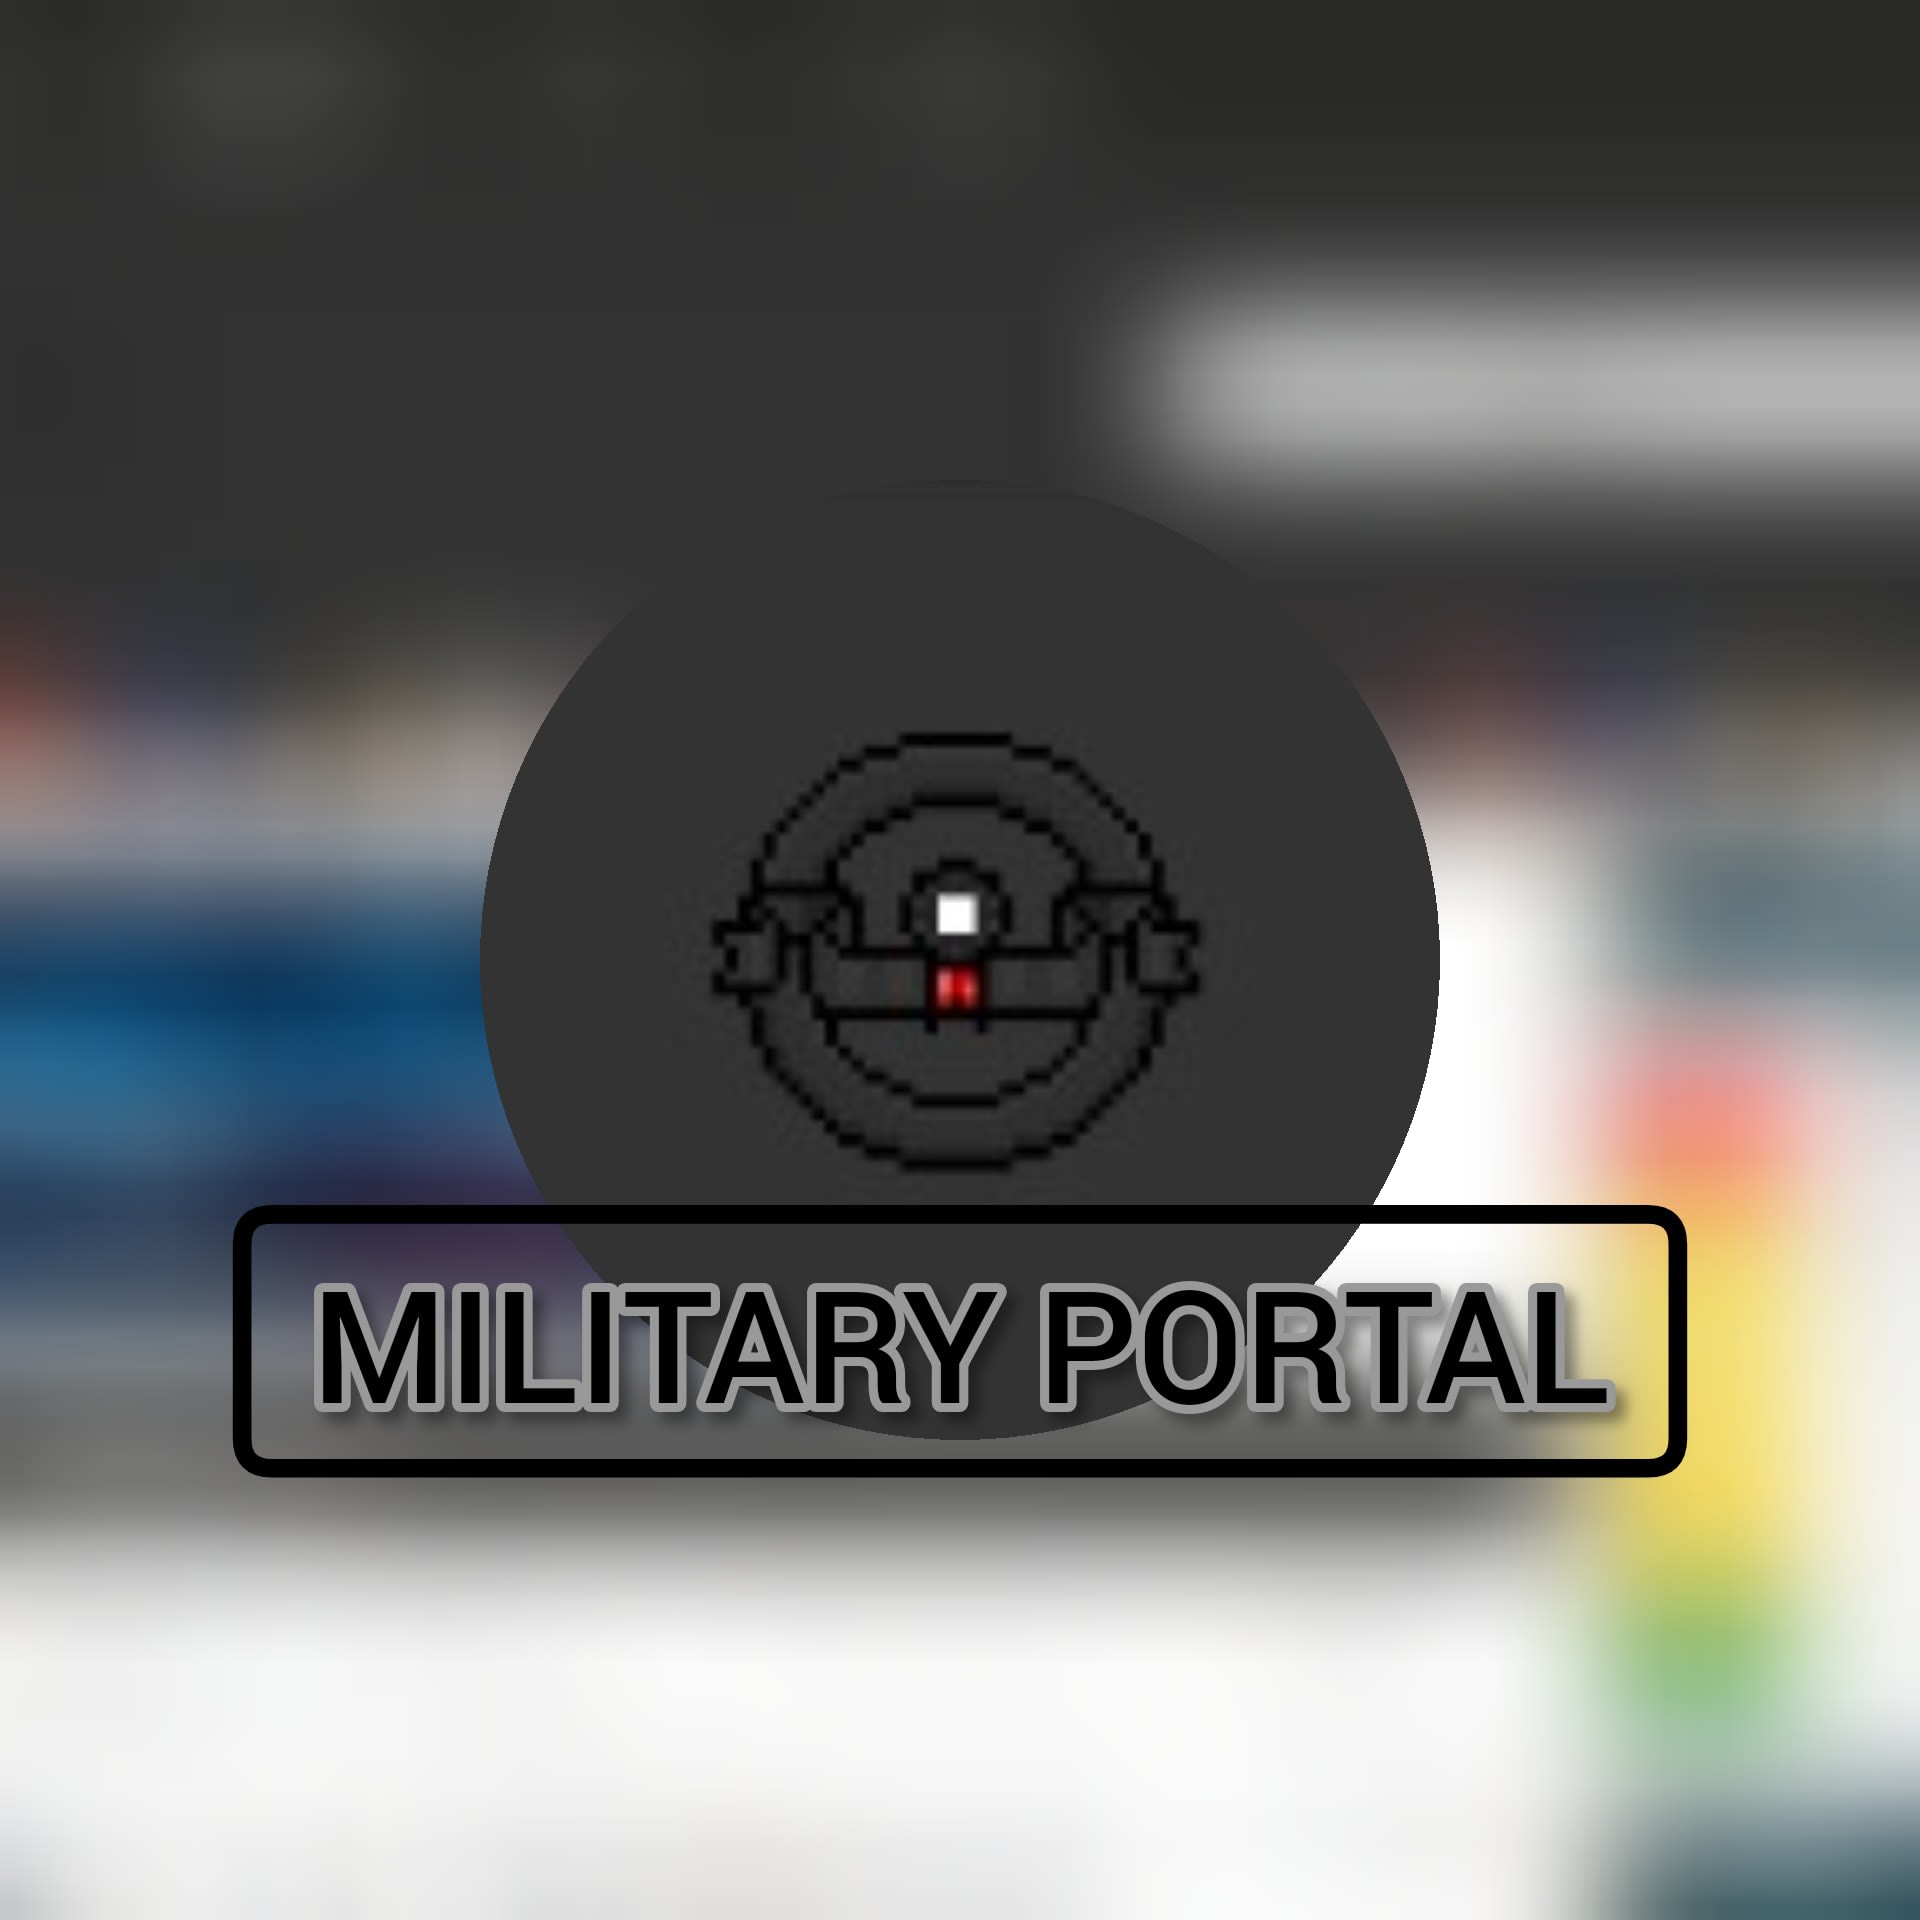 Military Portal